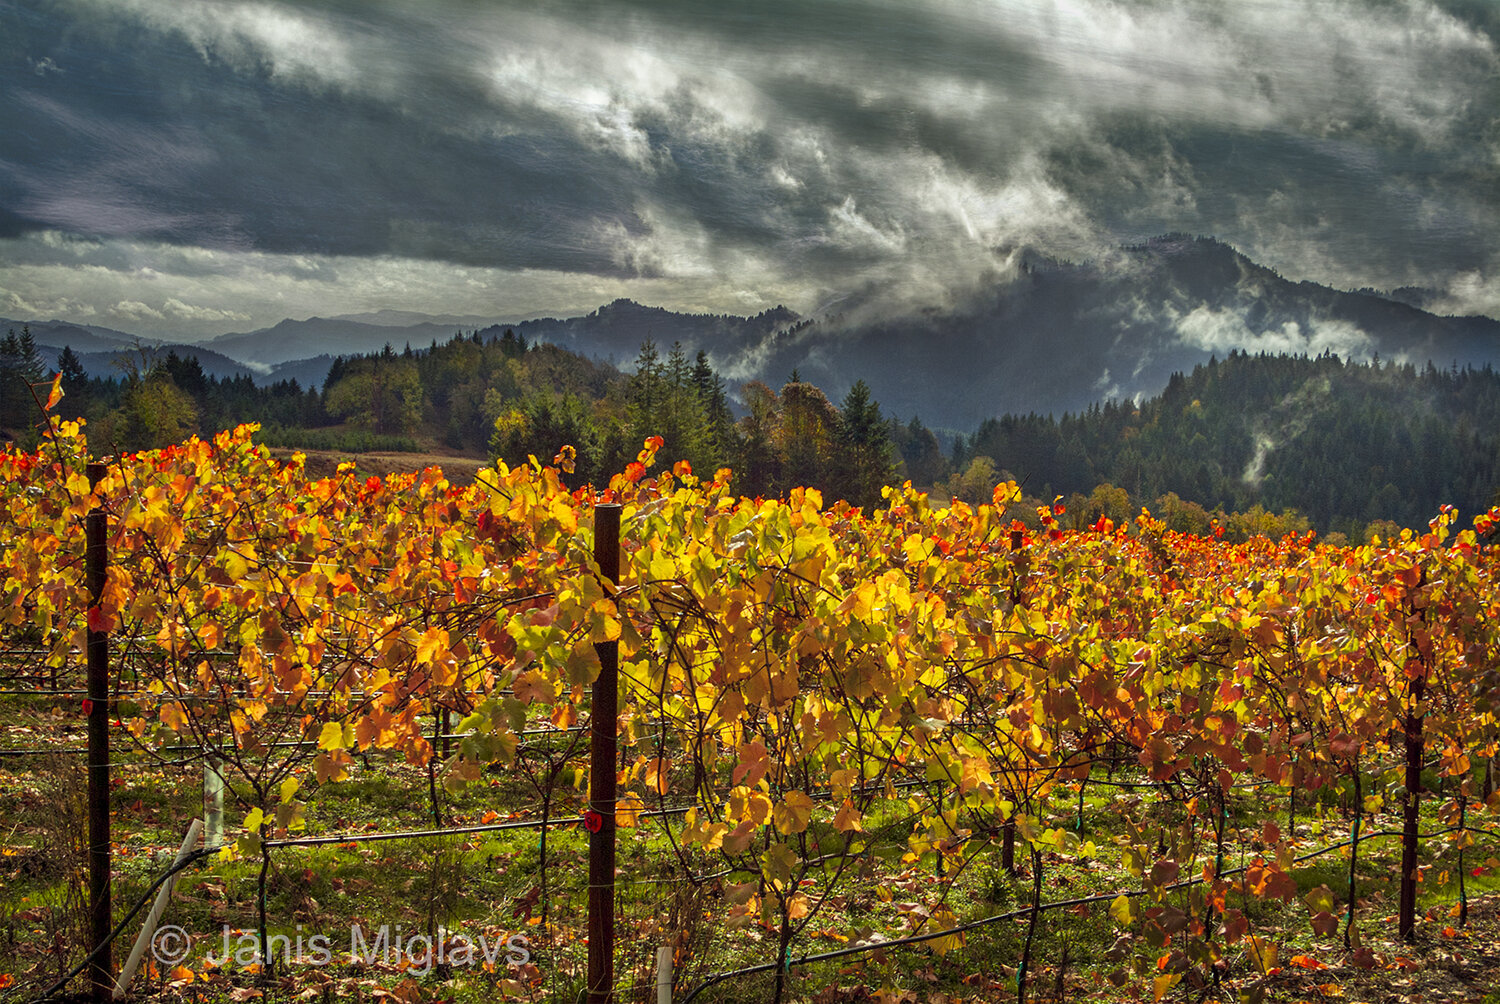 Storm over Pinot noir vines